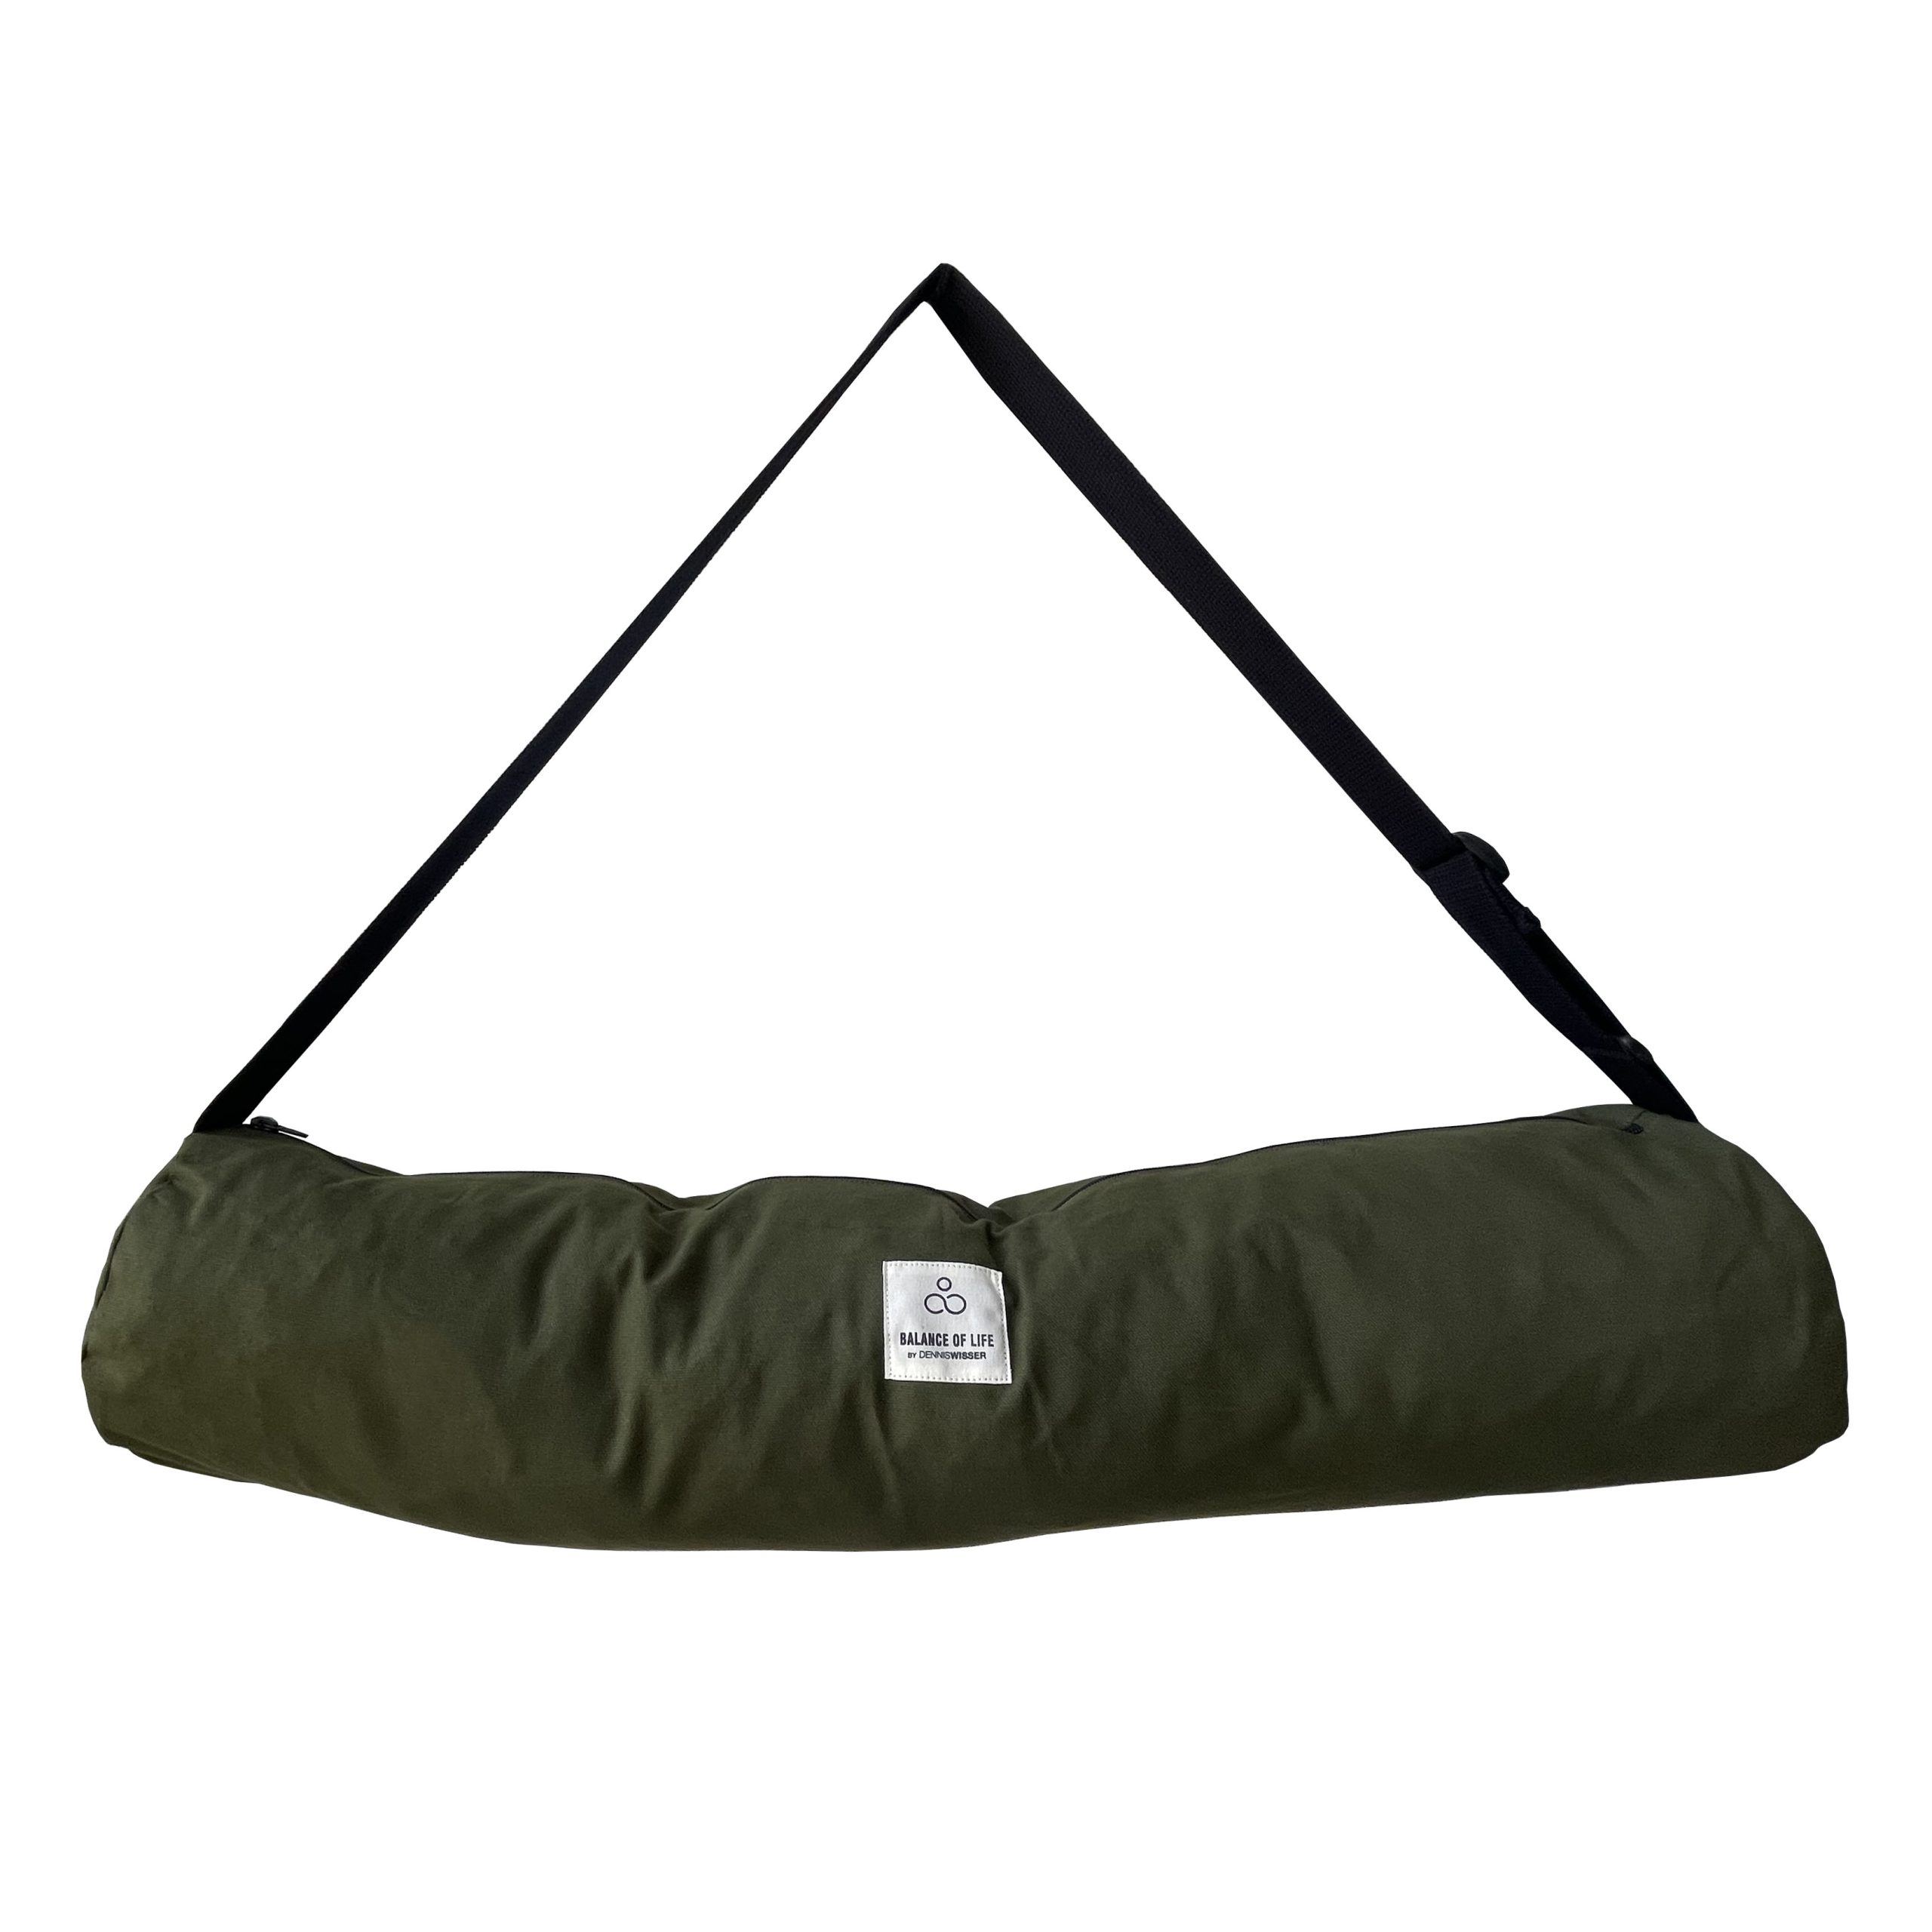 Olive yoga bag with zipper